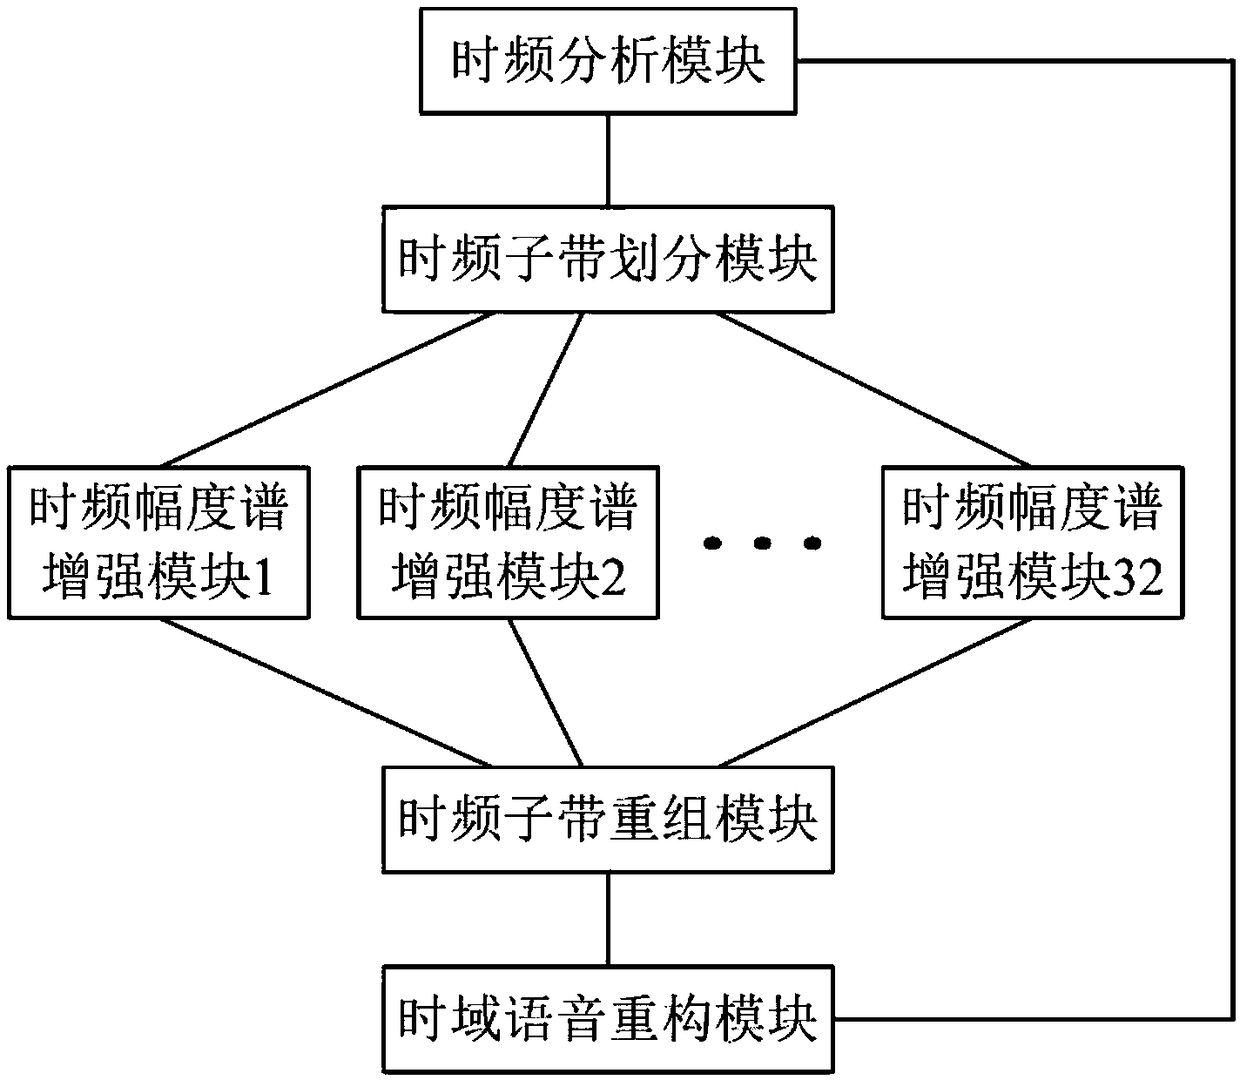 Speech enhancement system and method based on MFrSRRPCA algorithm